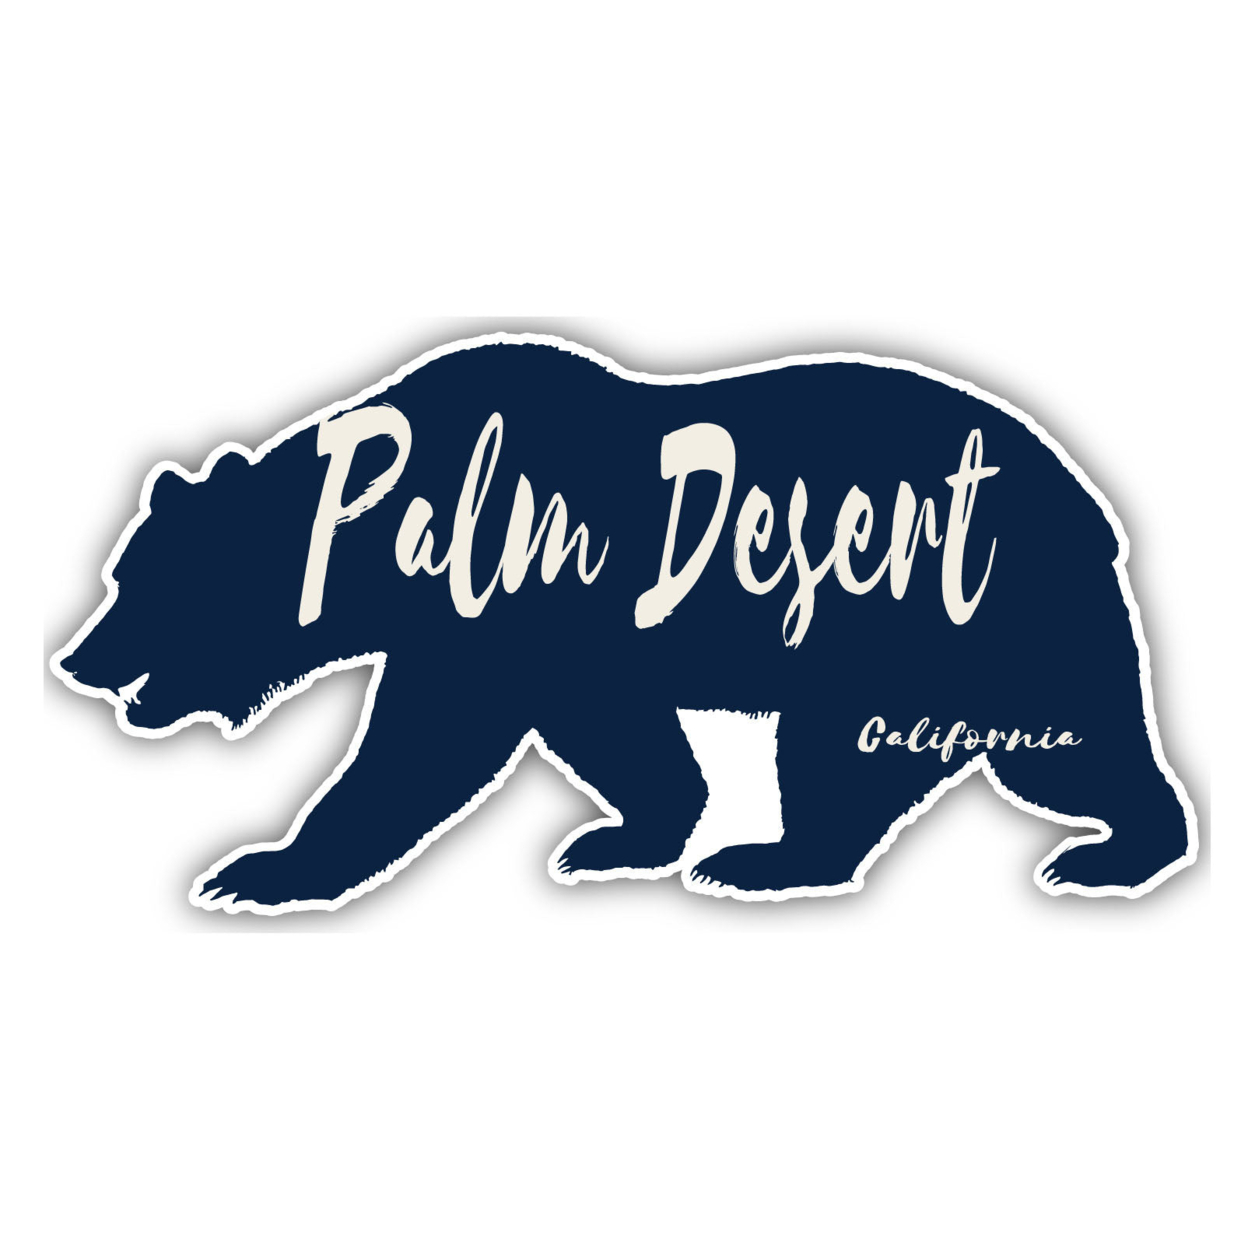 Palm Desert California Souvenir Decorative Stickers (Choose Theme And Size) - Single Unit, 2-Inch, Tent